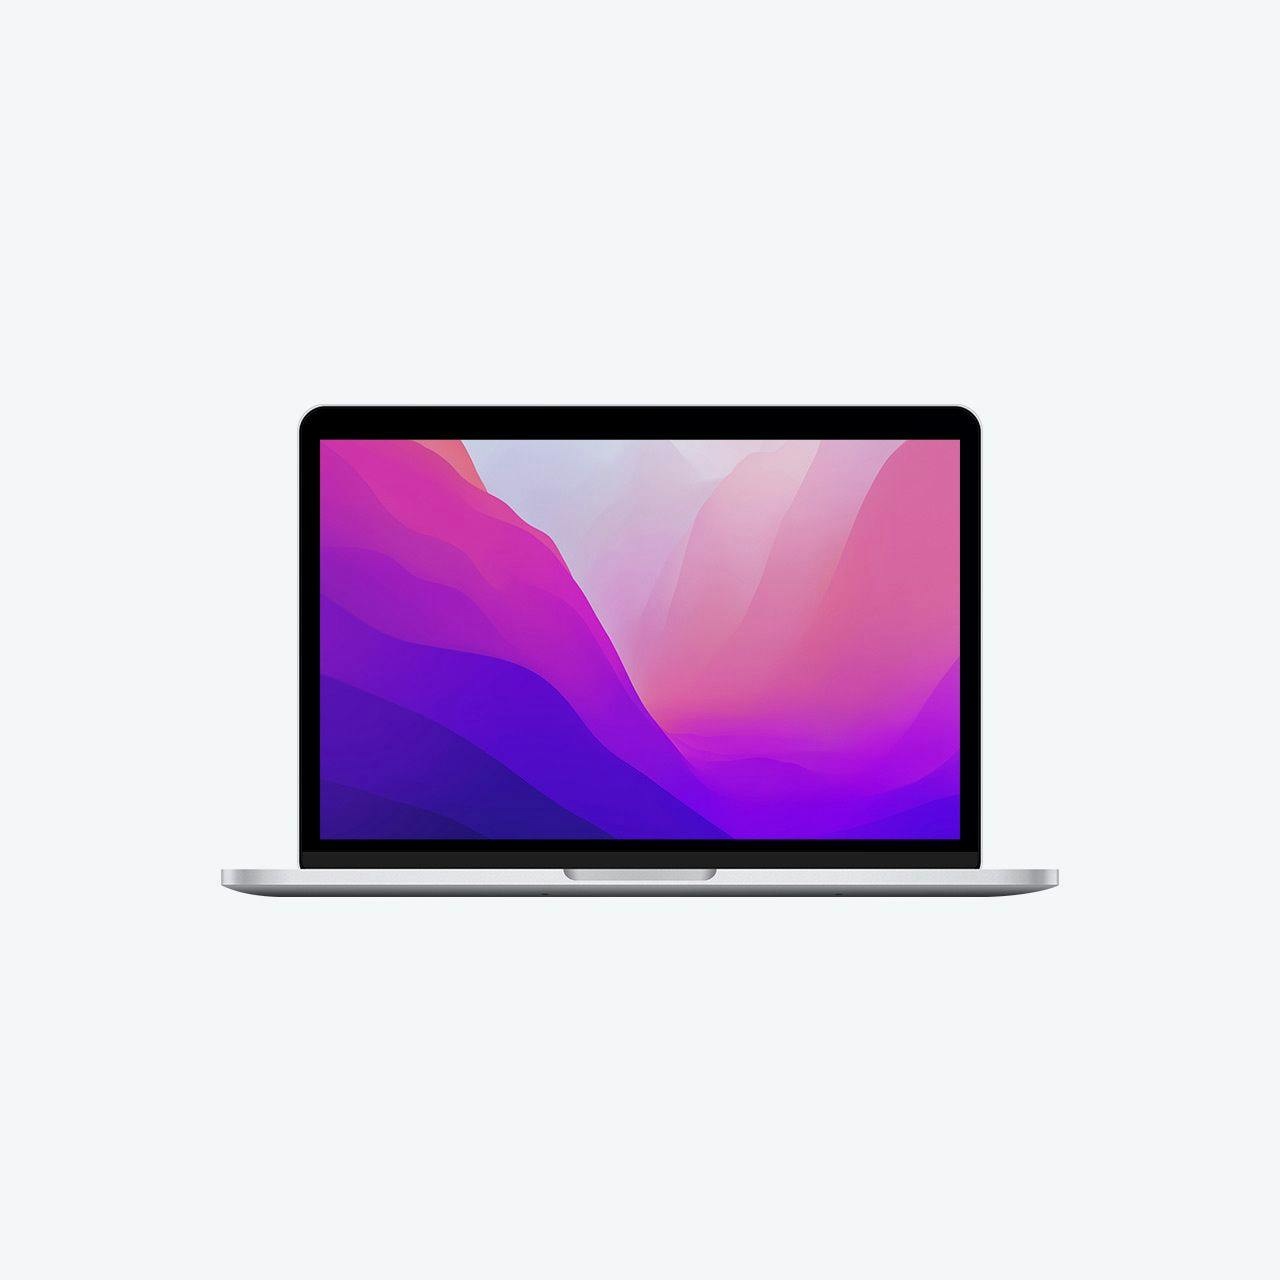 Image of a MacBook Pro (13-inch, Retina, 12-15).